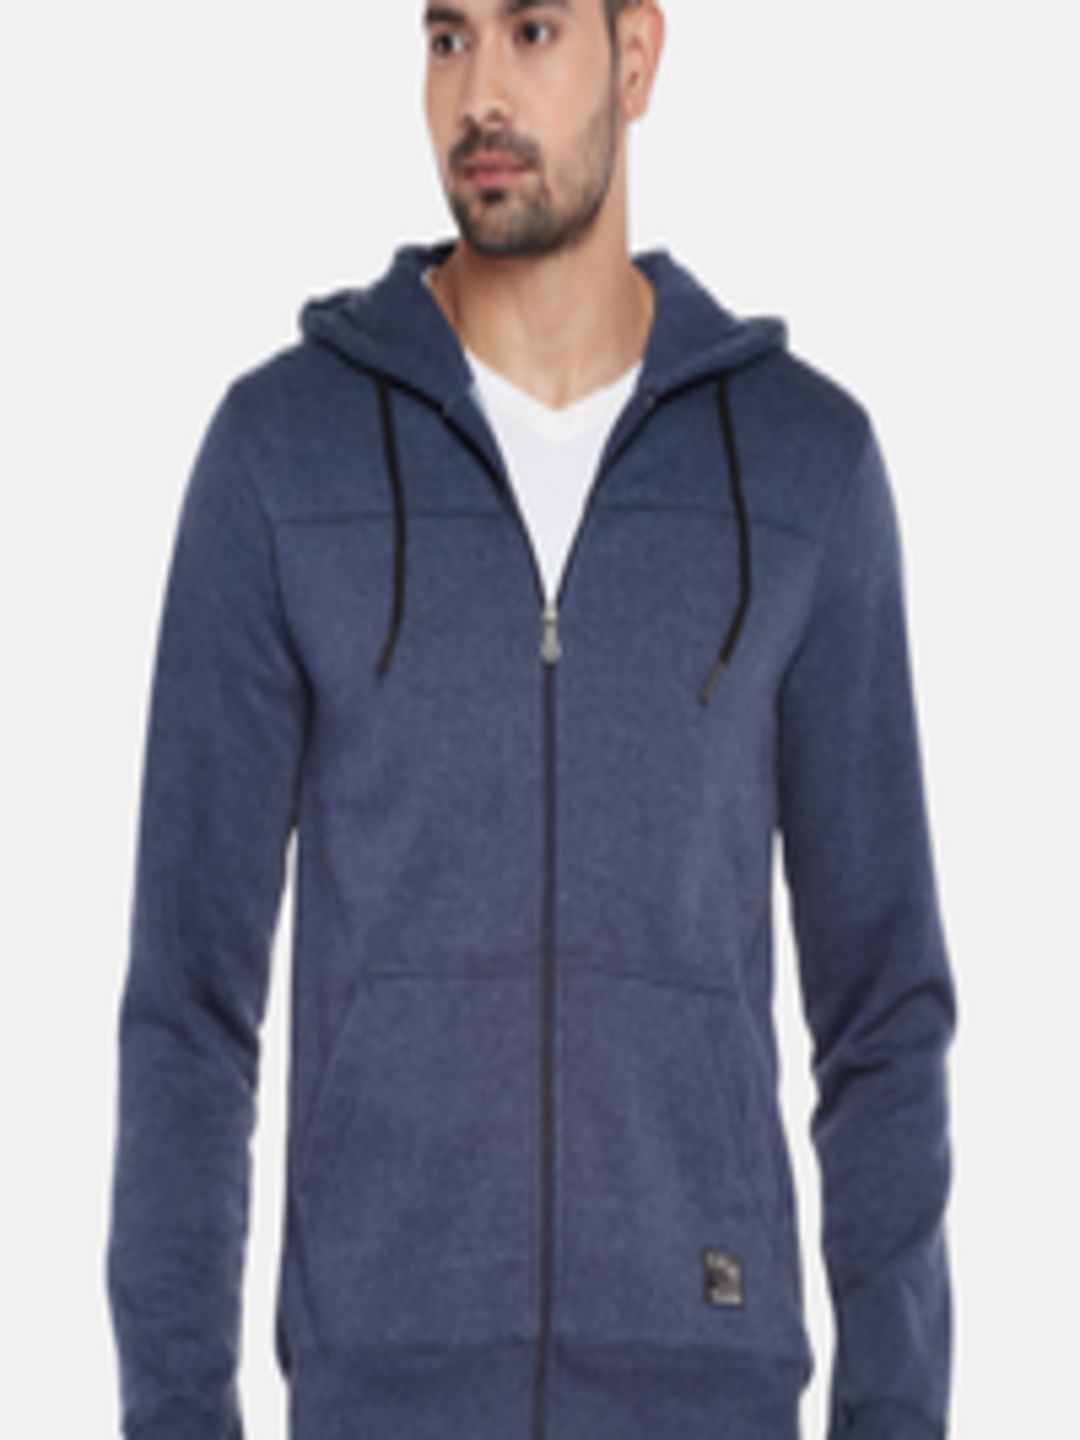 Buy People Men Navy Blue Solid Hooded Sweatshirt - Sweatshirts for Men ...